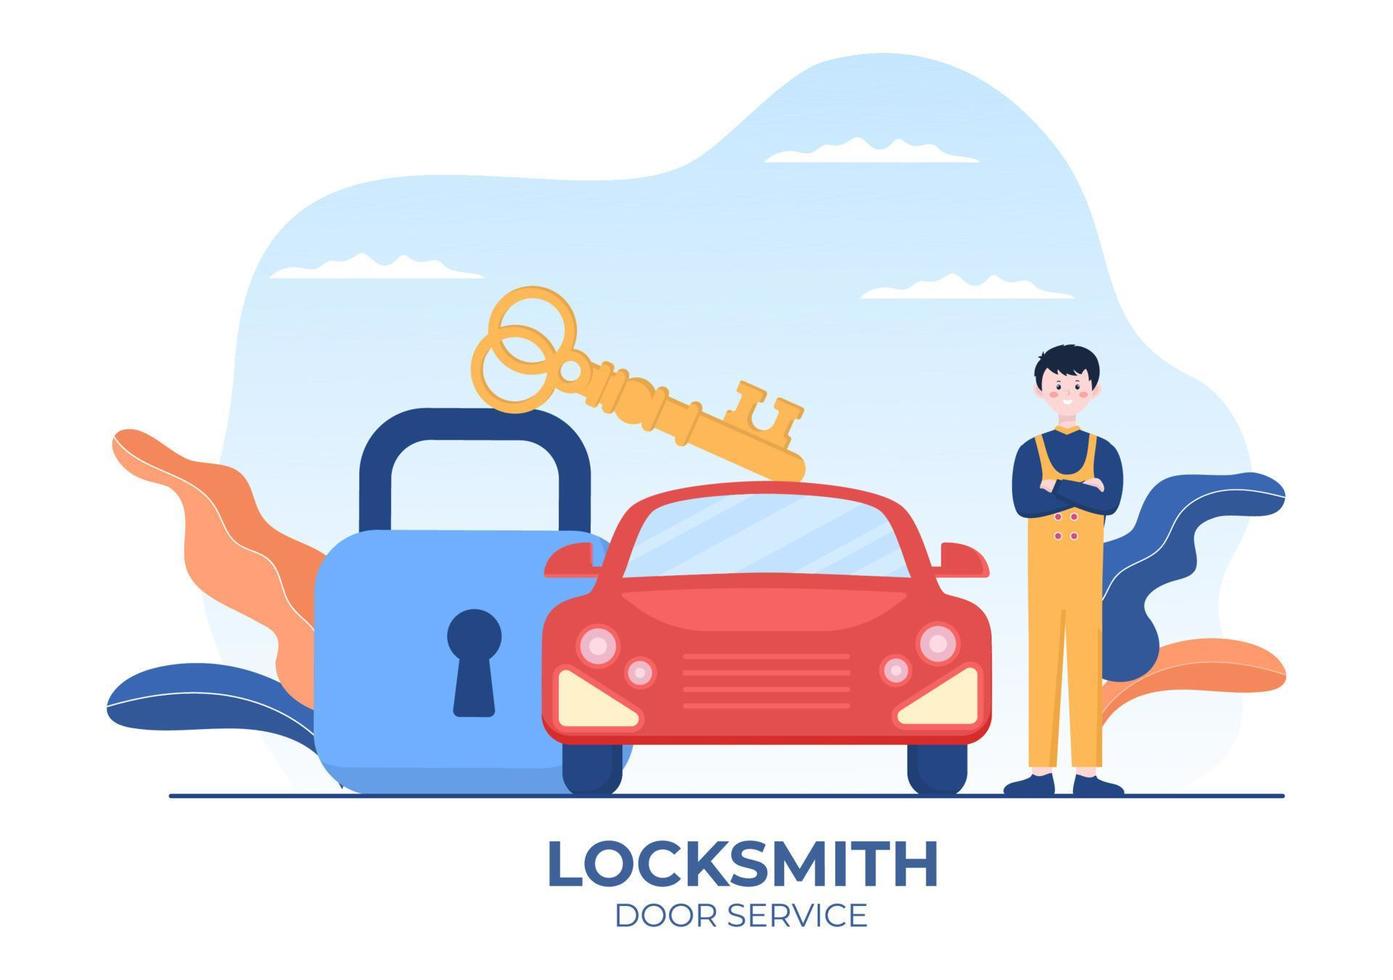 Locksmith Repairman Car Door Repair, Maintenance and Installation Service with Equipment as Screwdriver or Key in Flat Cartoon Background Illustration vector